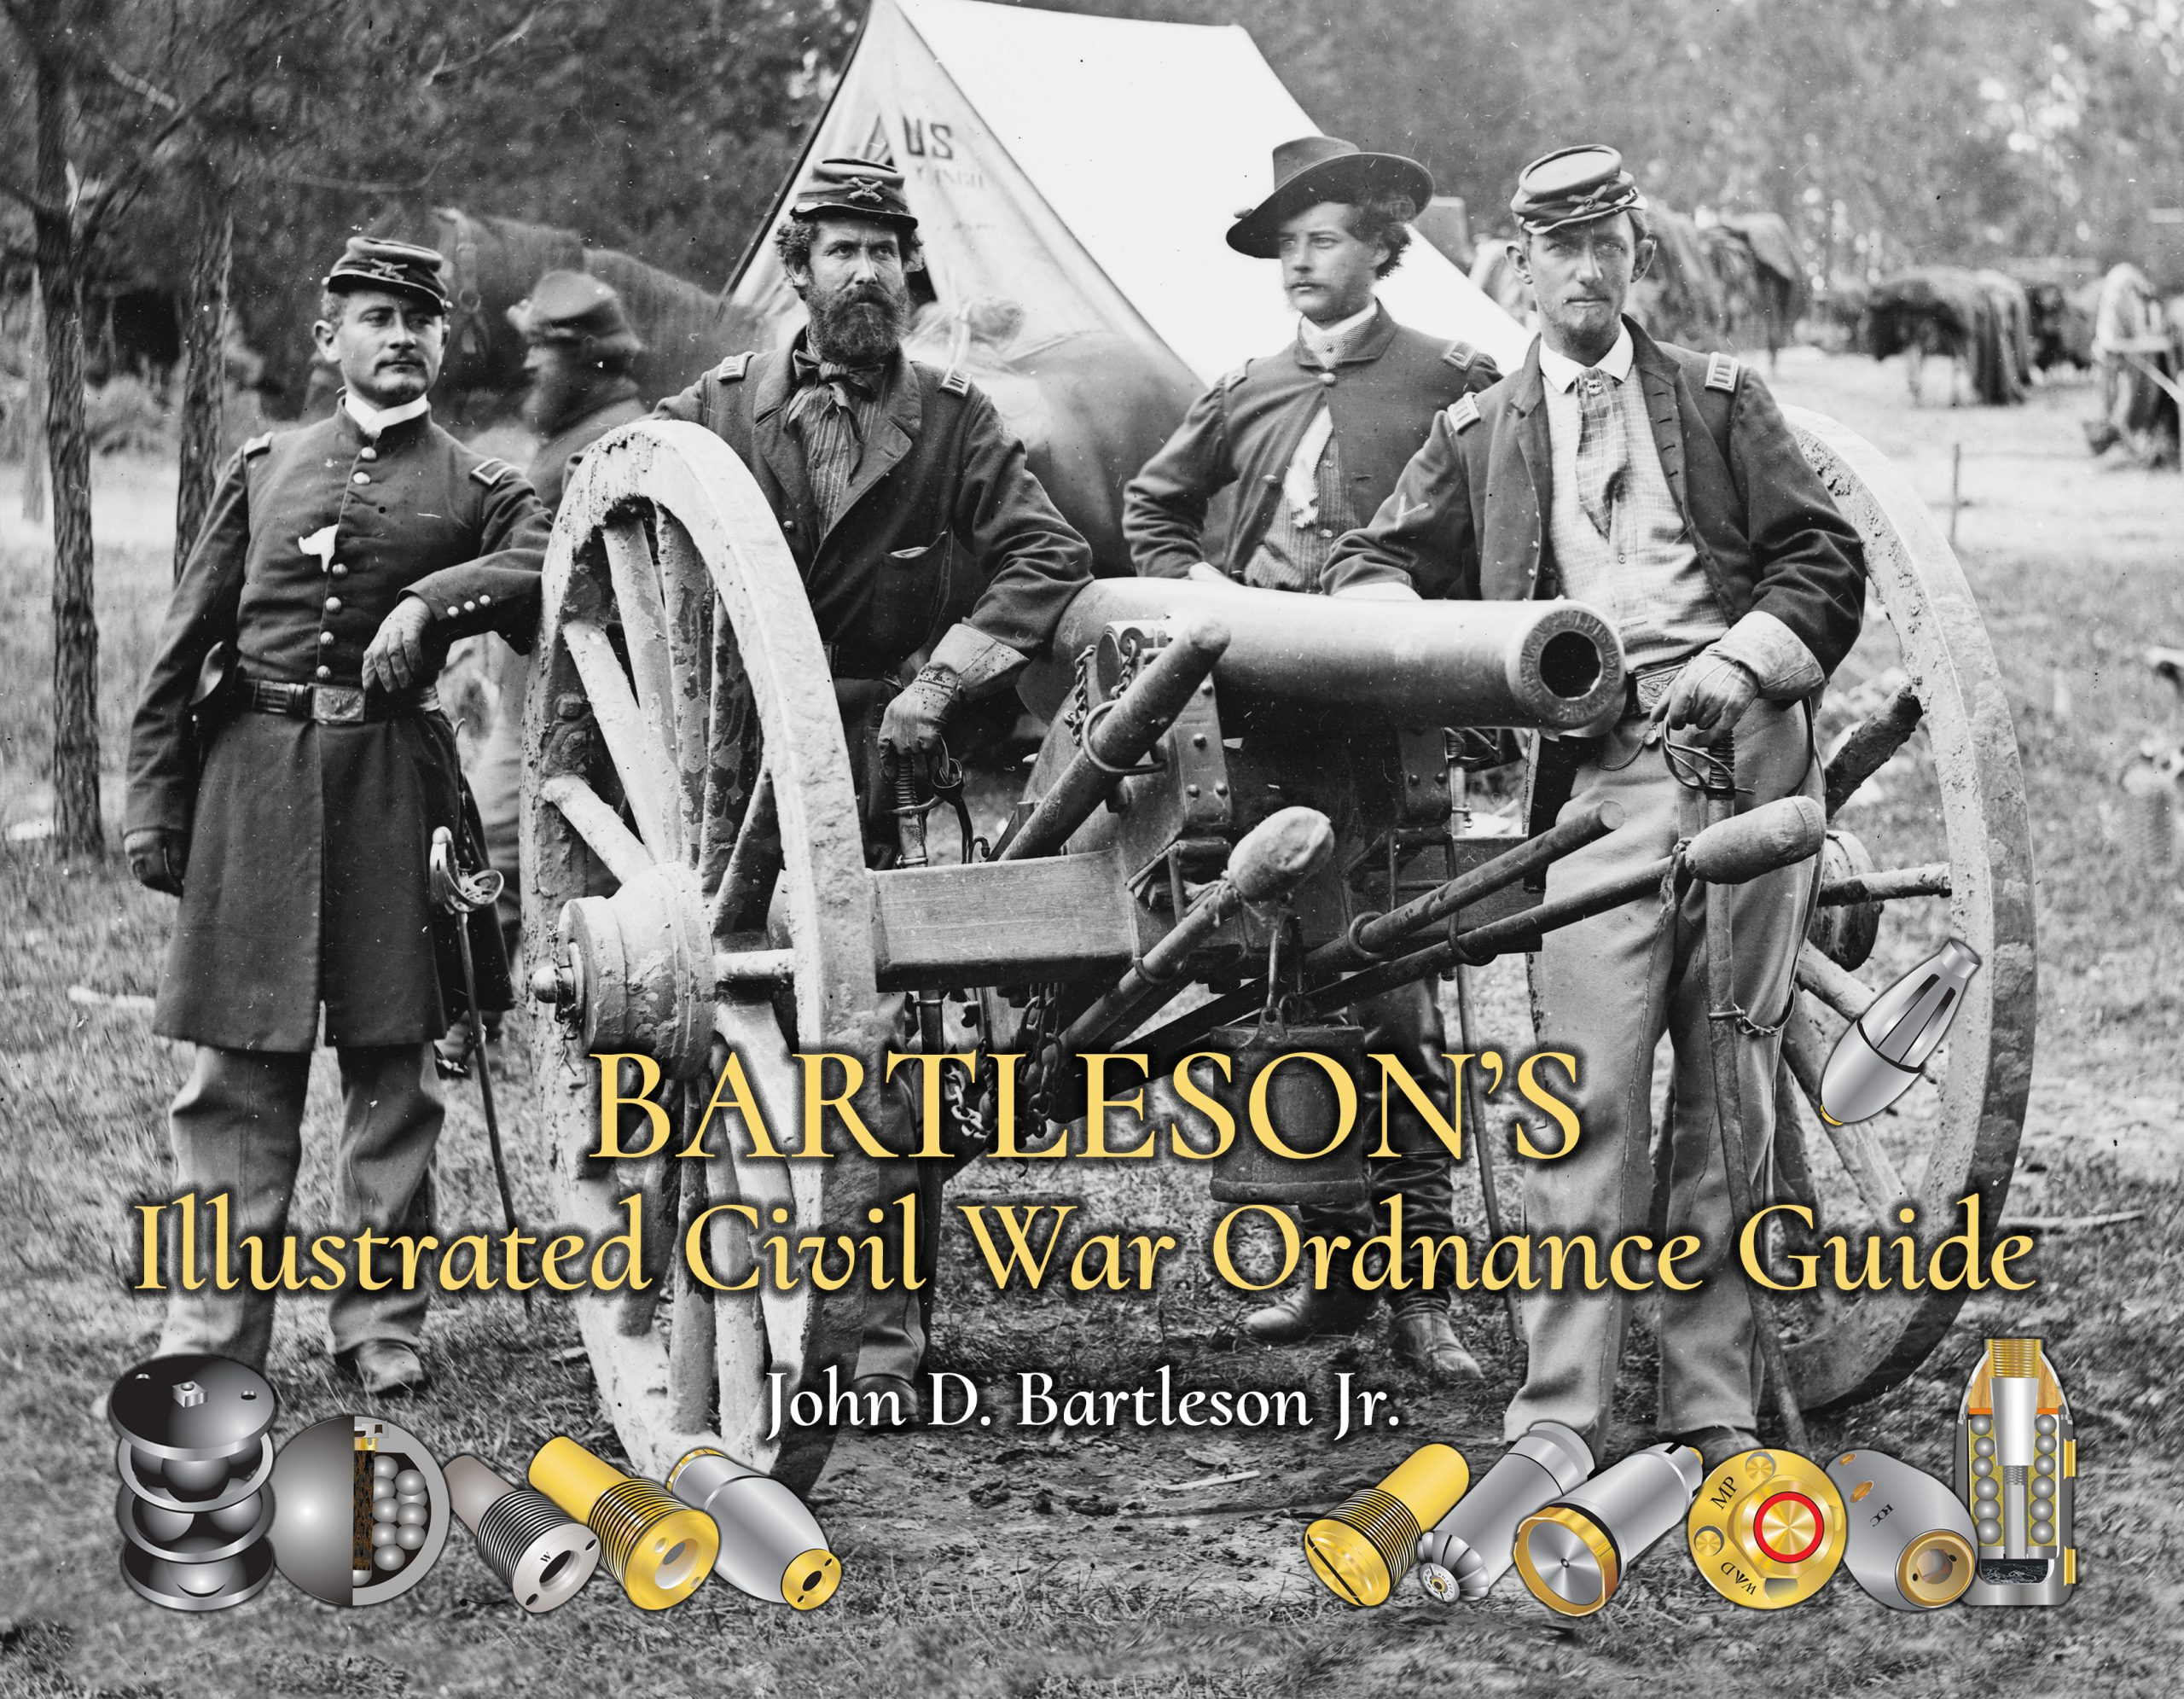 Bartleson’s Illustrated Civil War Ordnance Guide